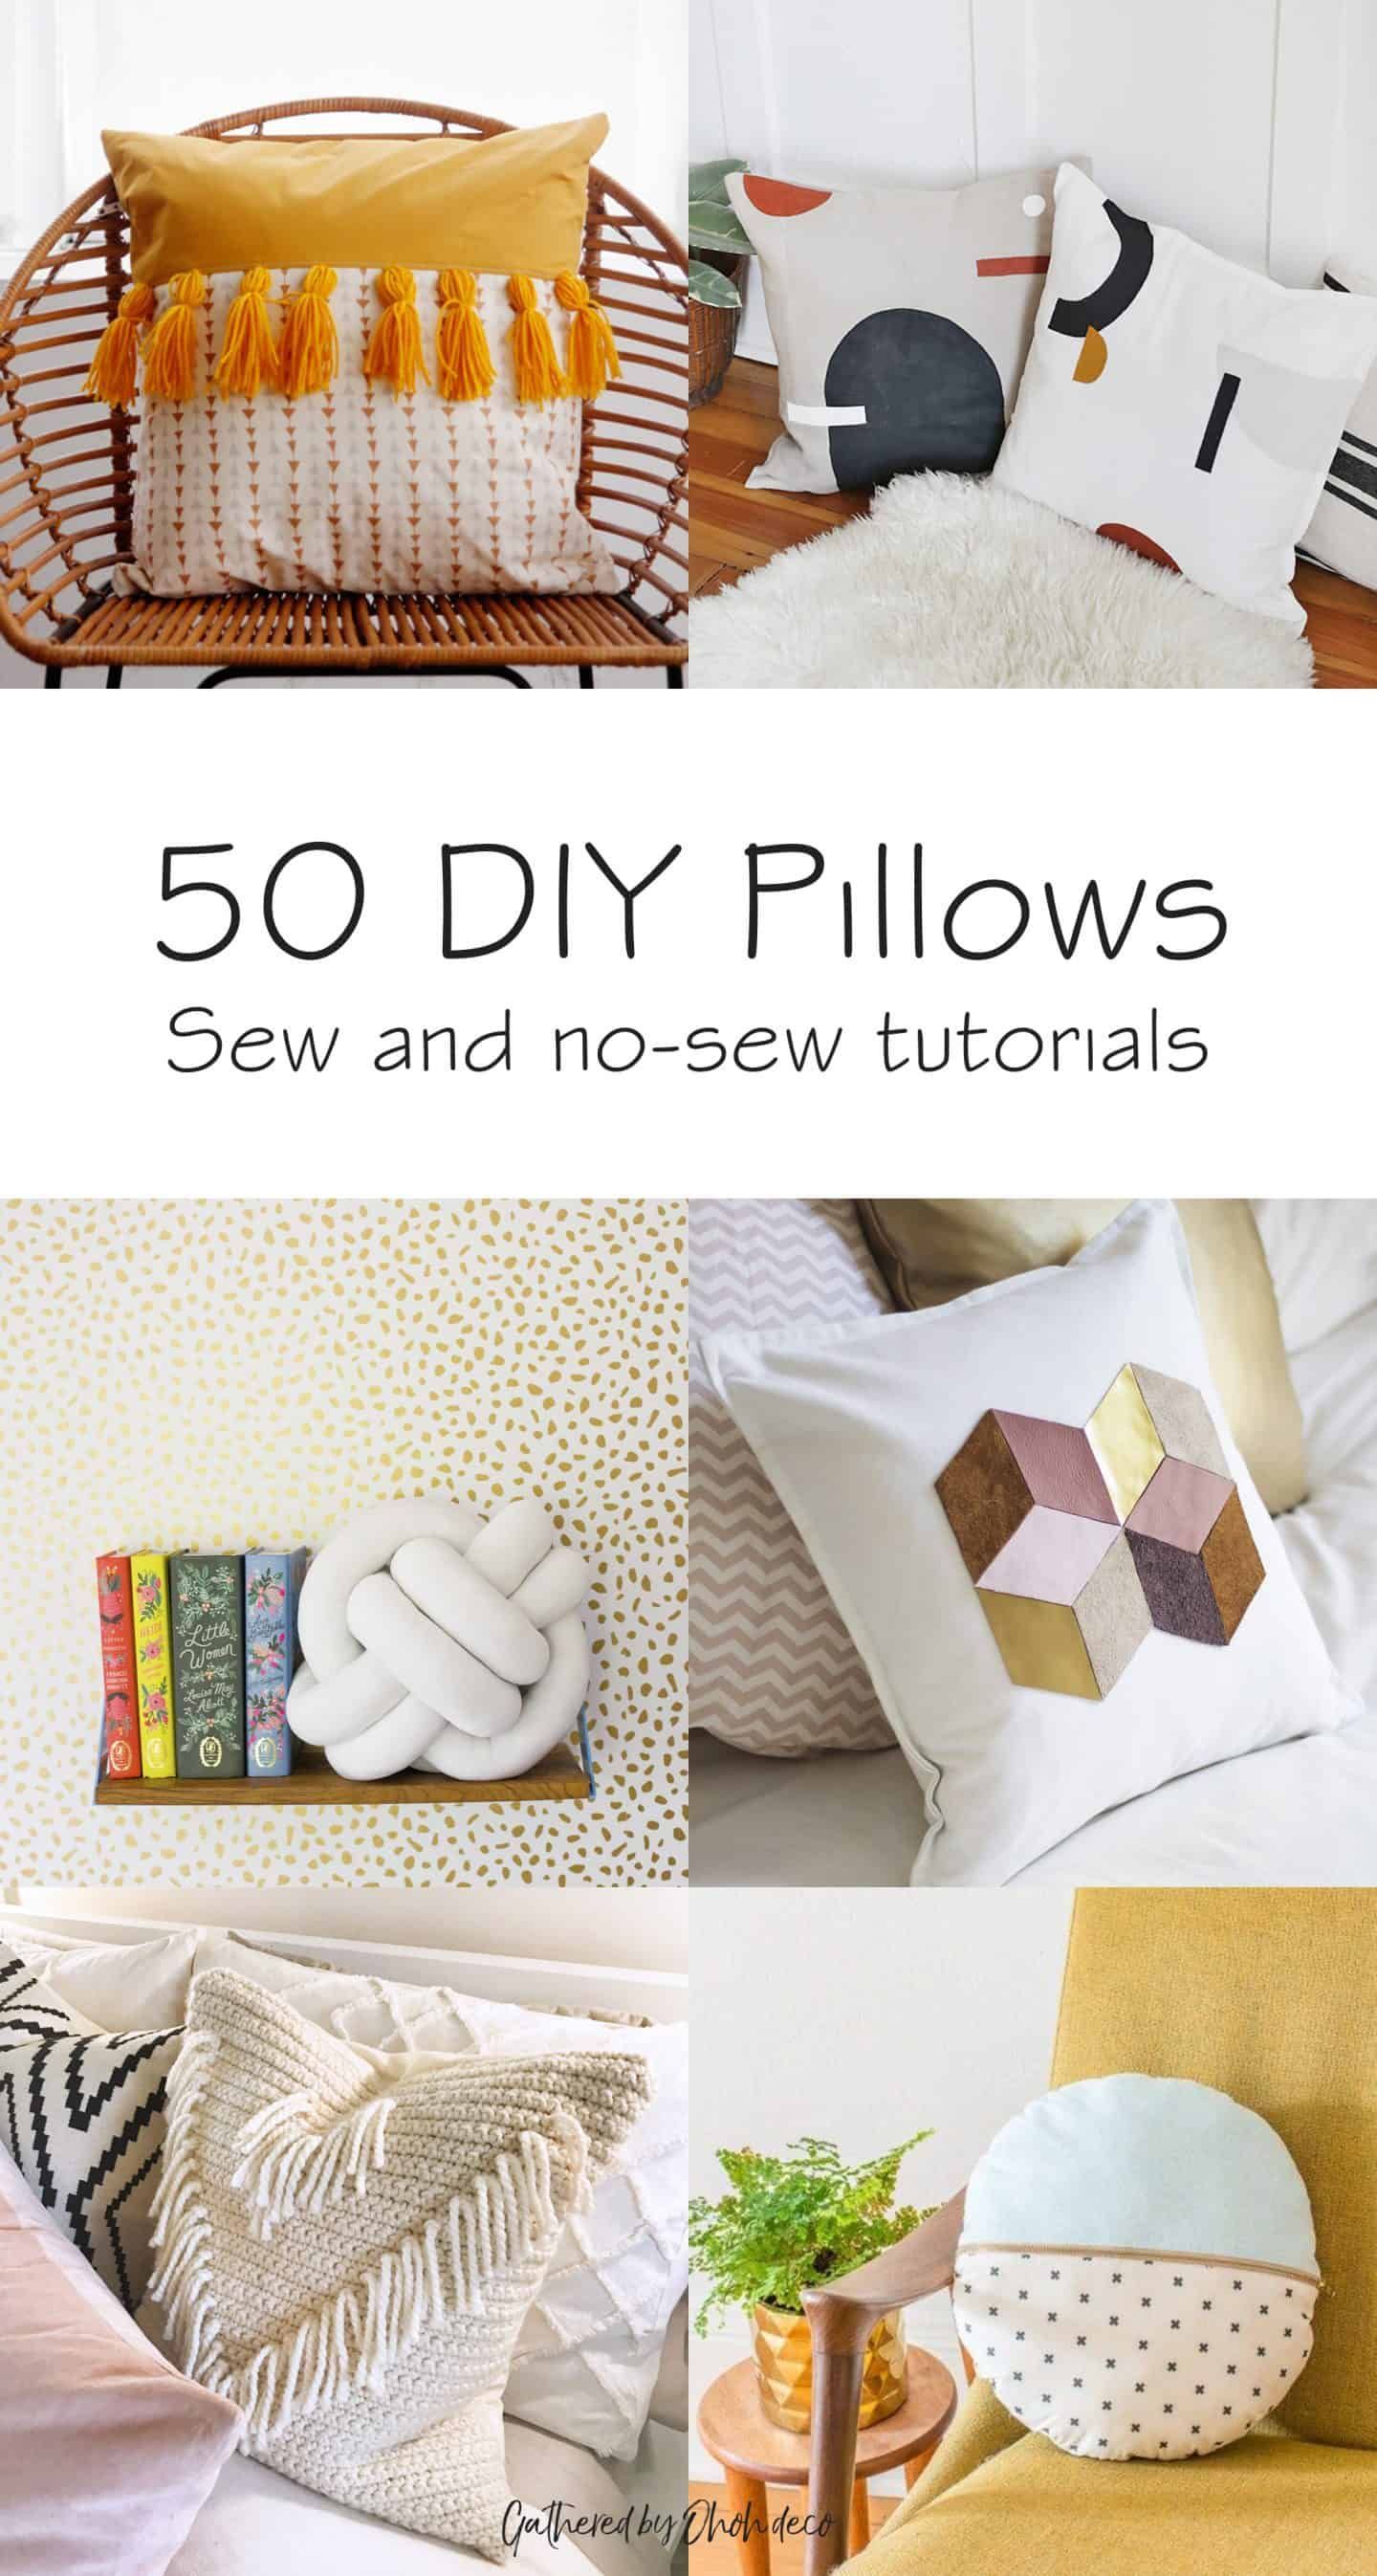 50 DIY pillows to jazz up your decor - Ohoh deco - 50 DIY pillows to jazz up your decor - Ohoh deco -   17 diy Pillows designs ideas